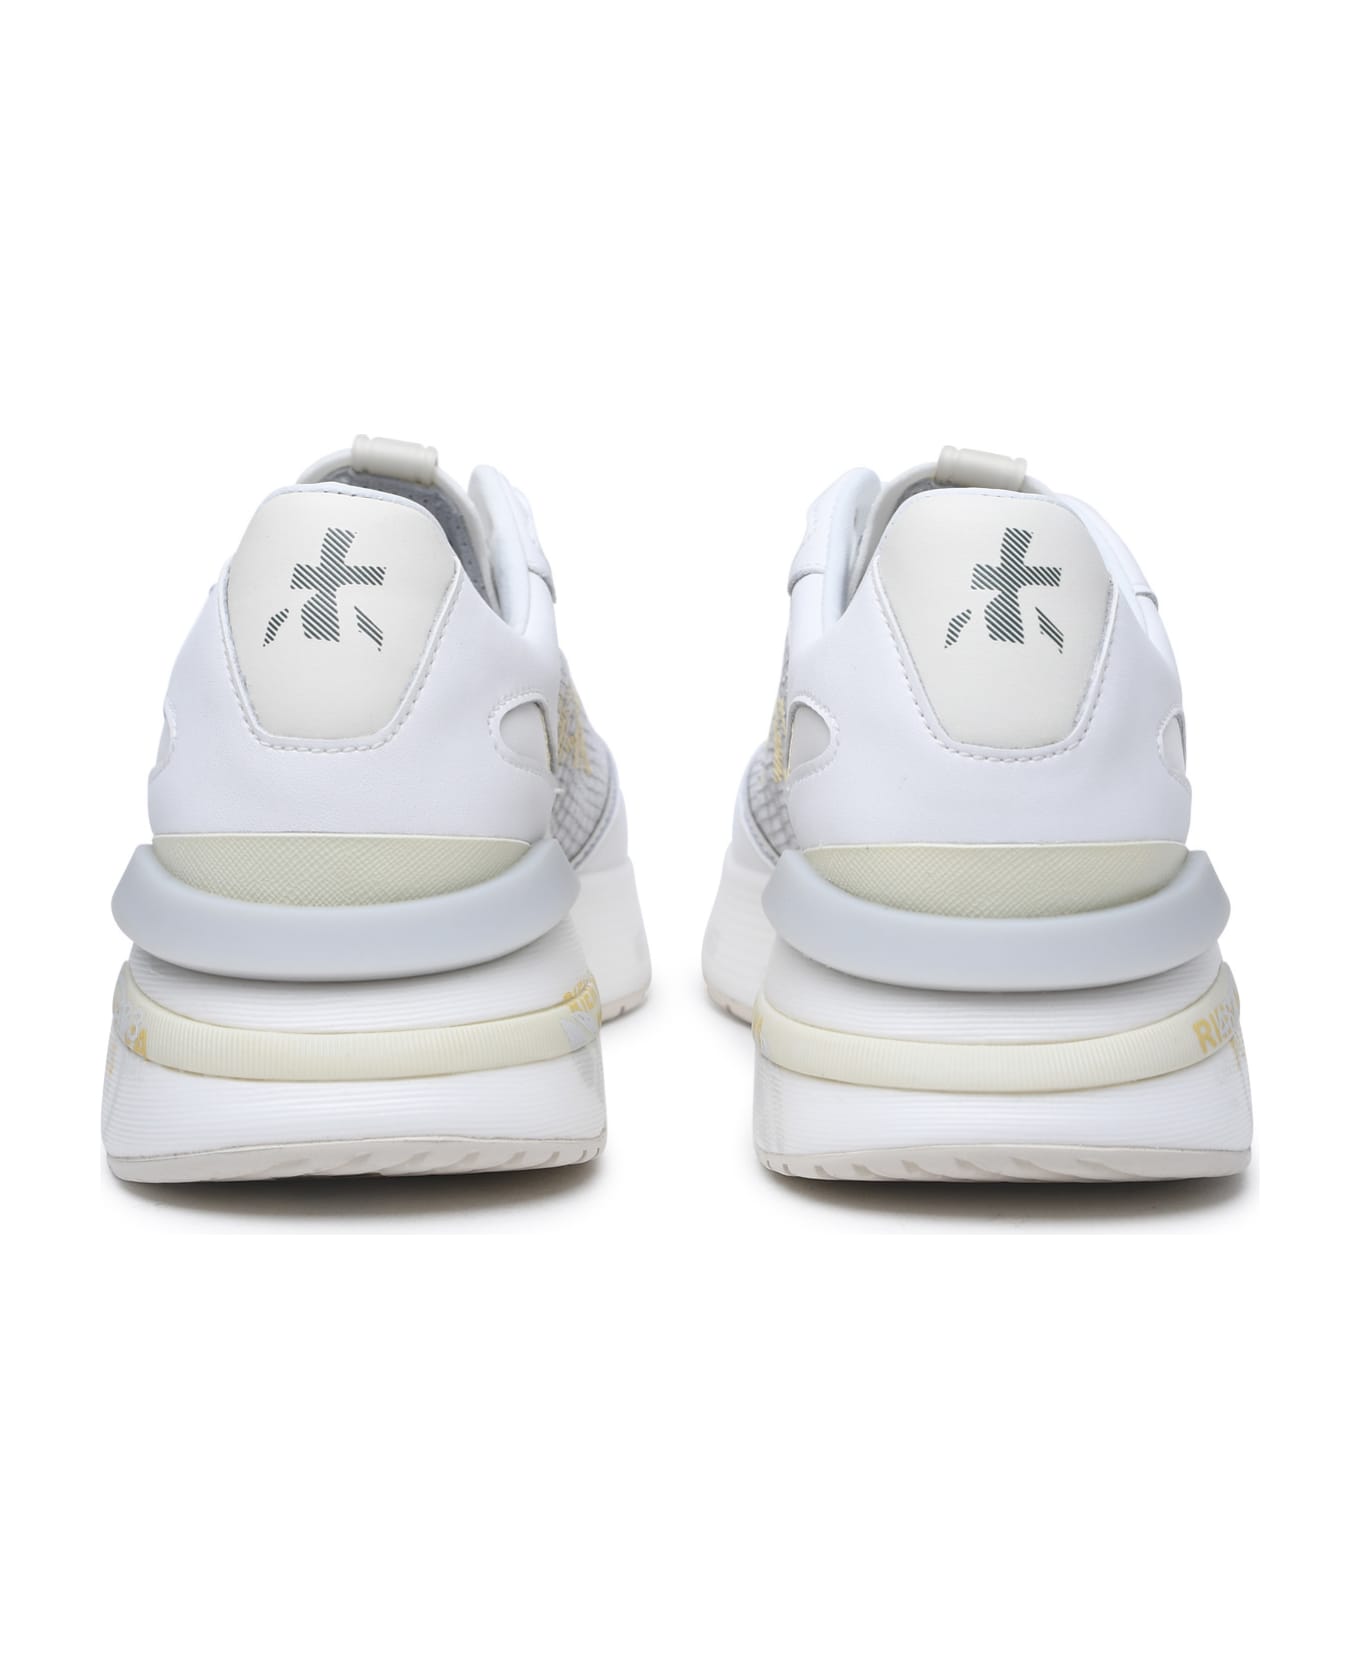 Premiata 'moerund' Sneakers In Leather And White Fabric - Bianco